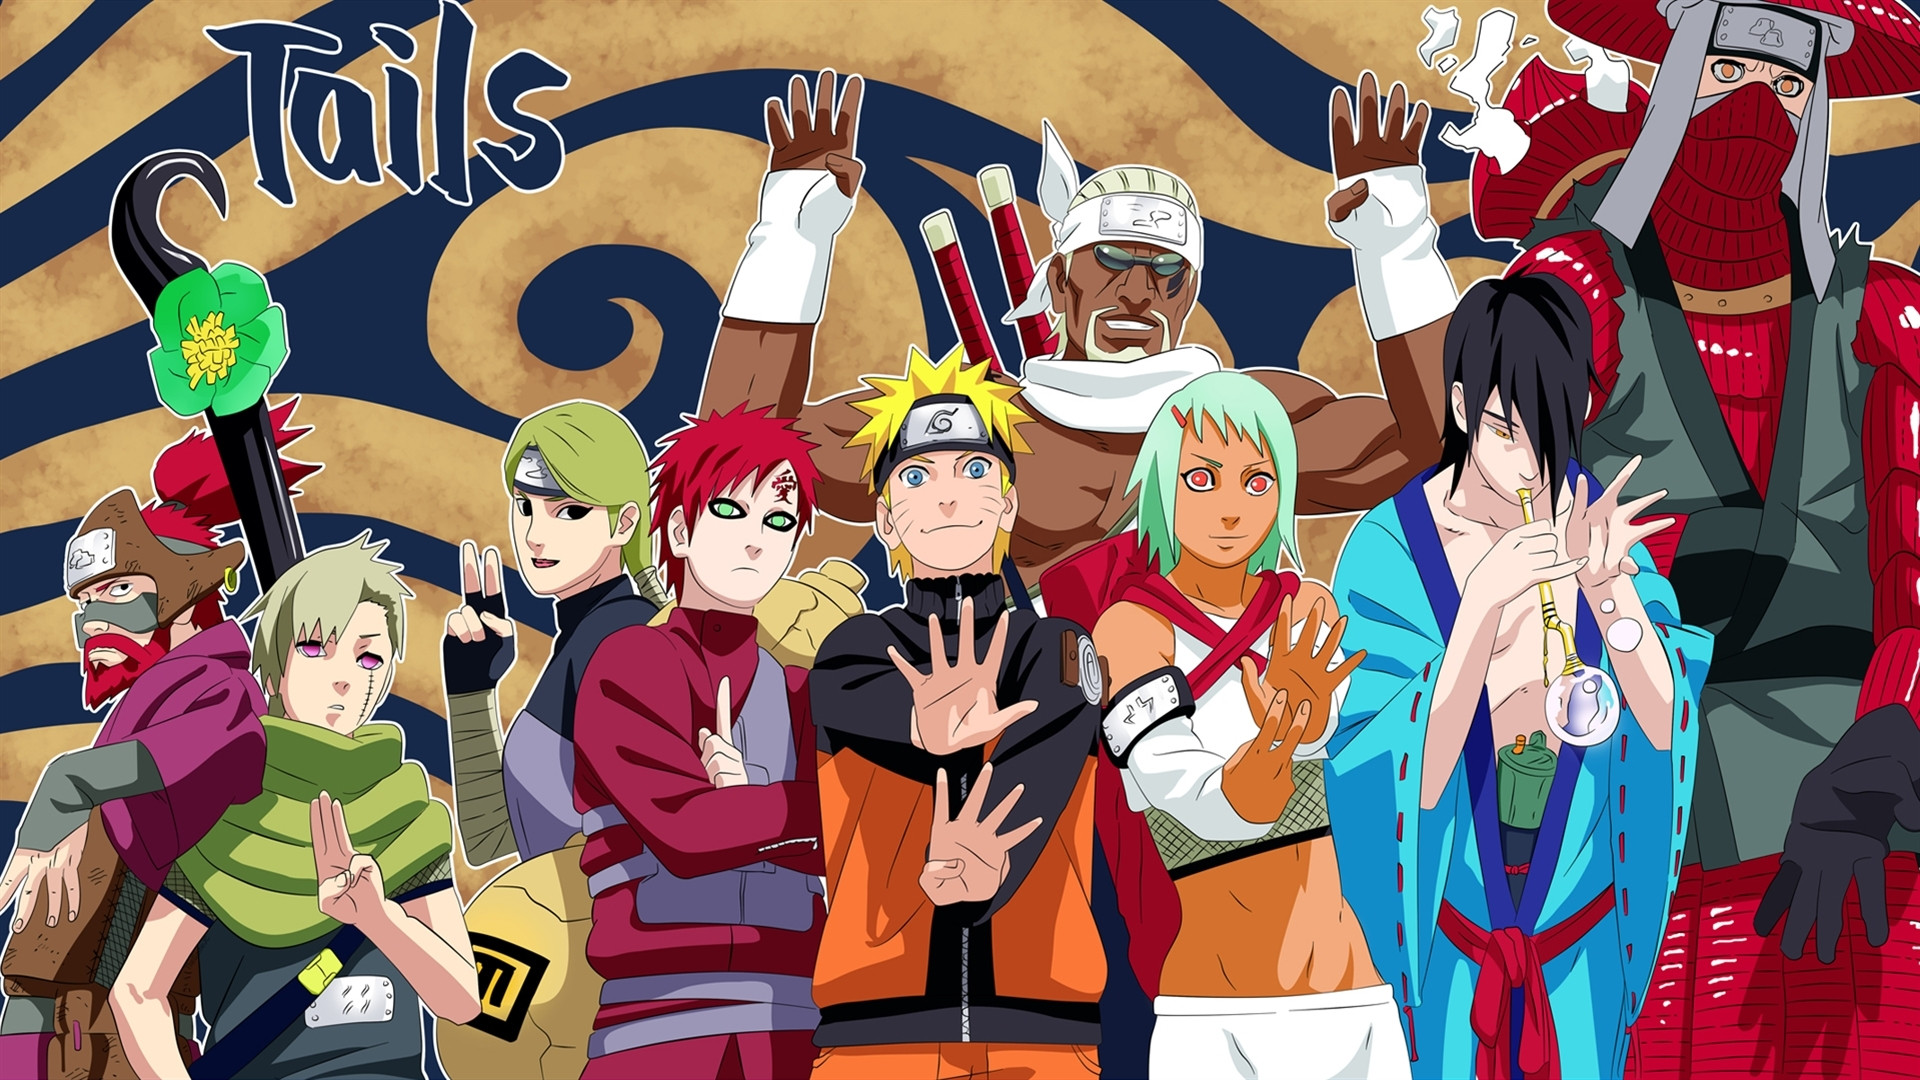 Naruto Character List - All Naruto Characters Listed